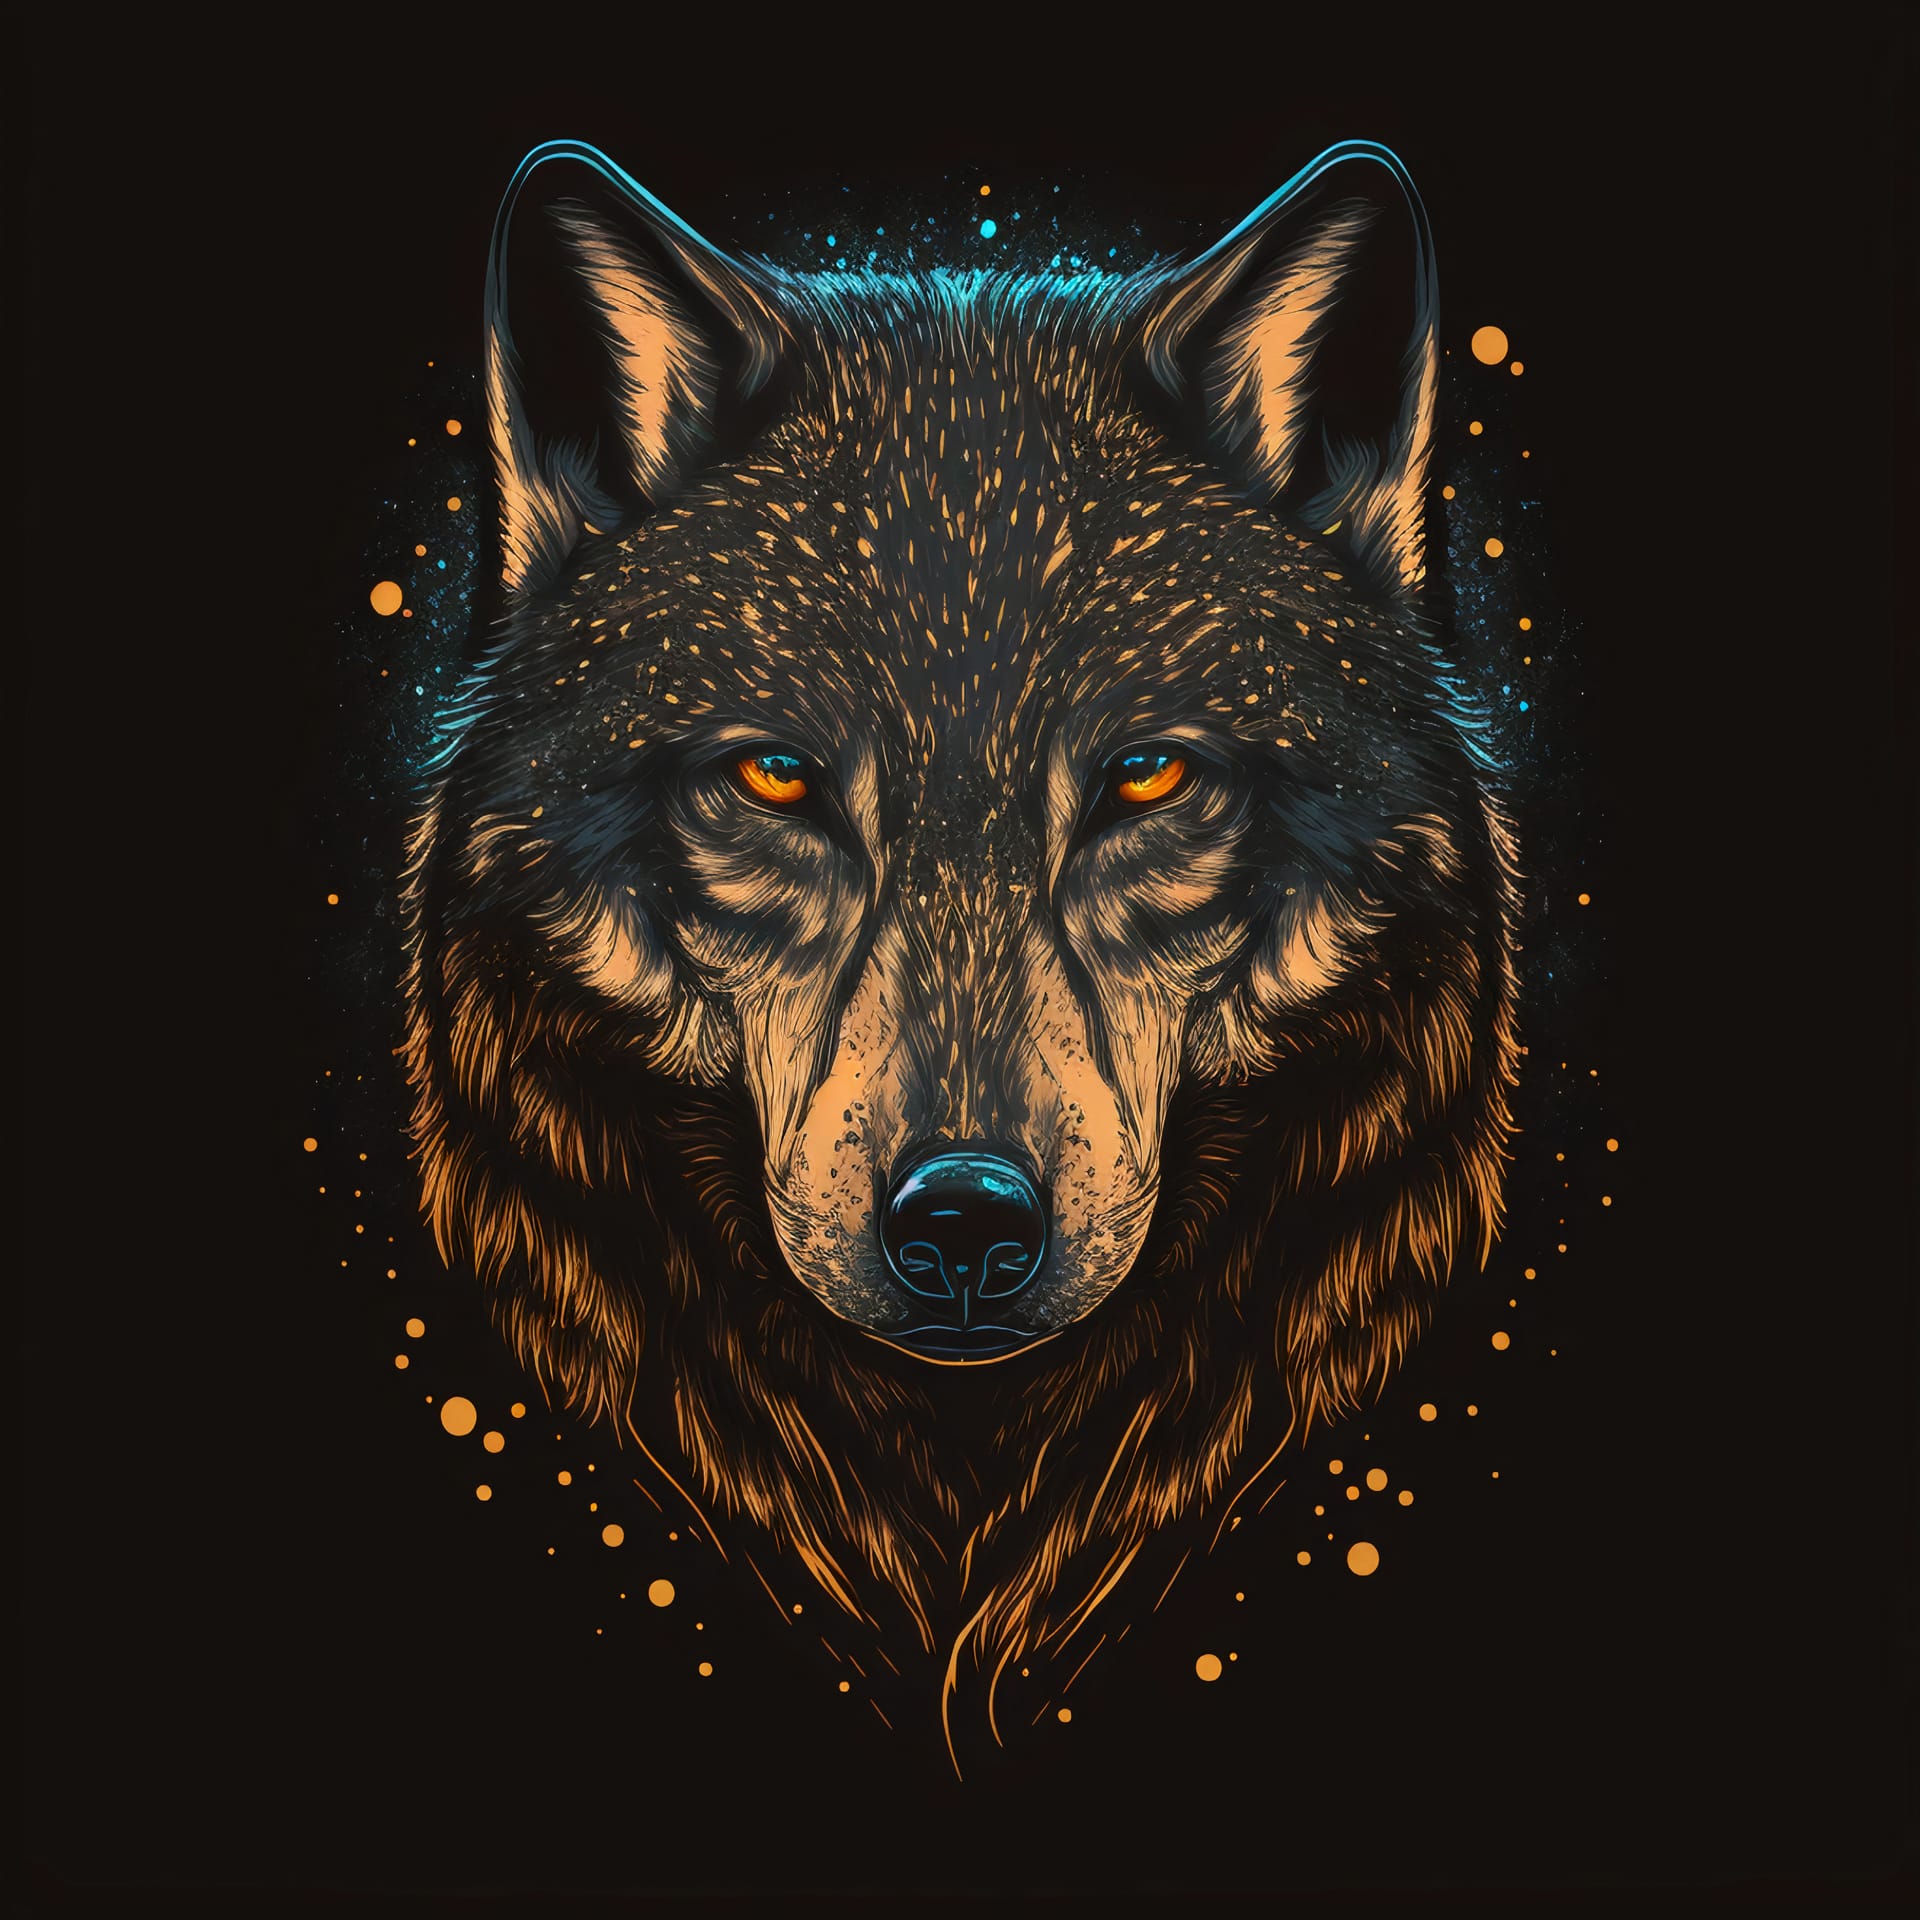 Illustration front view wolf head stunningly beautiful design image